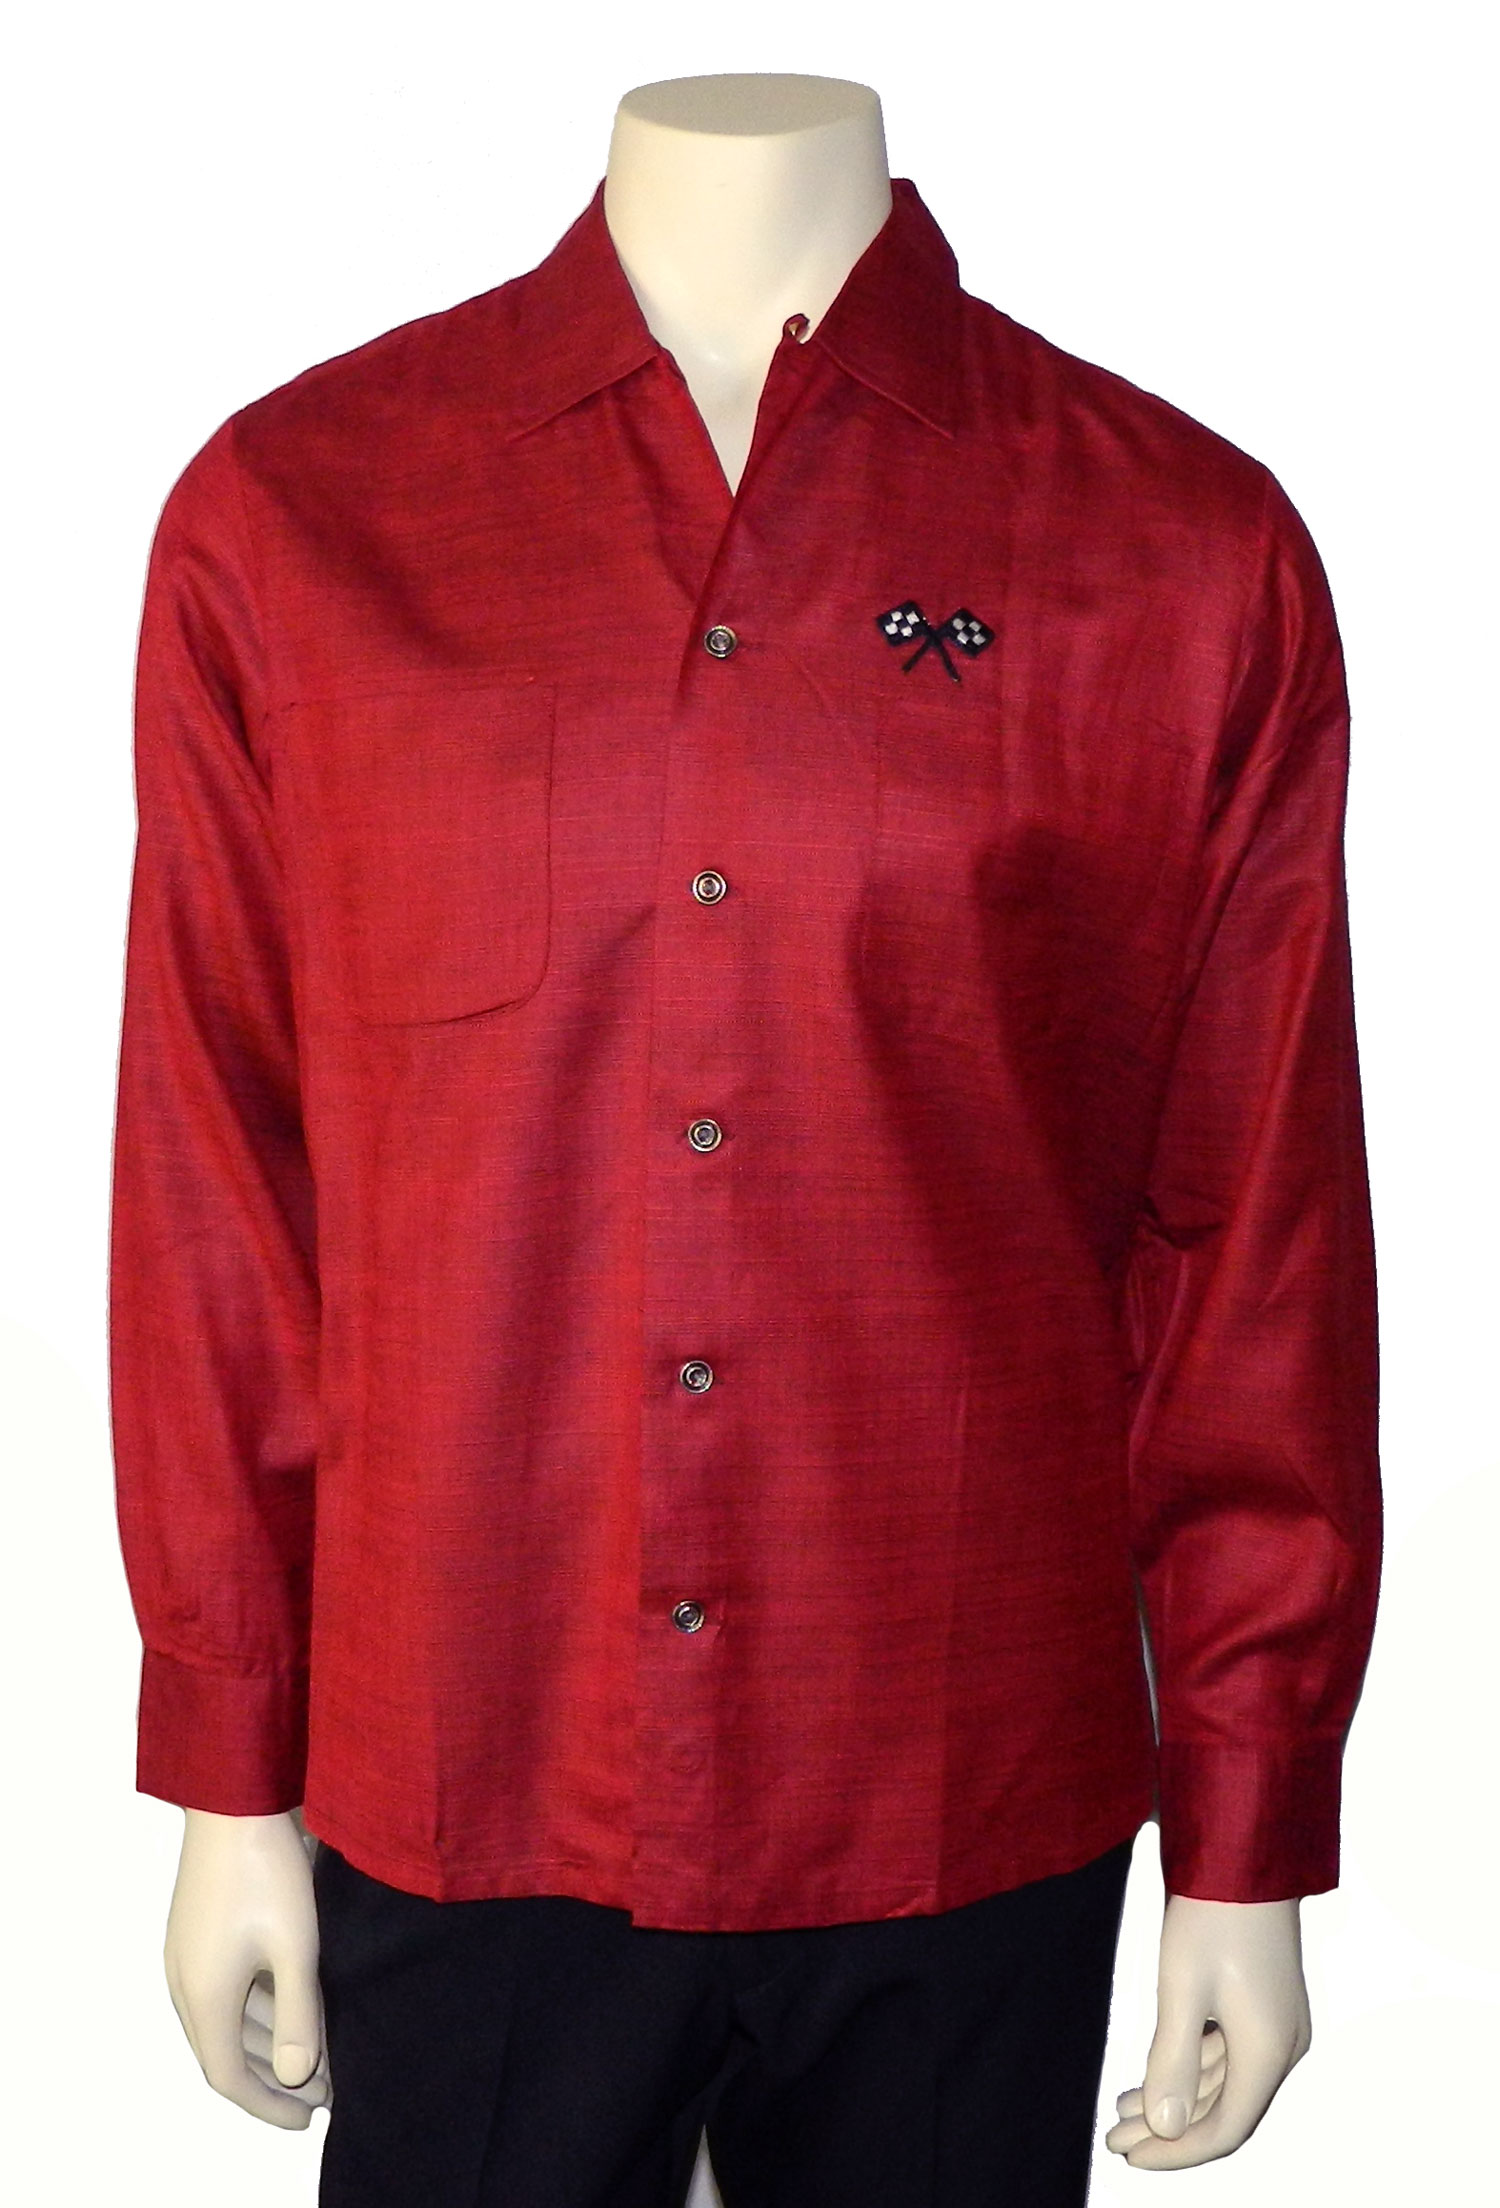 1950s maroon red rayon shirt